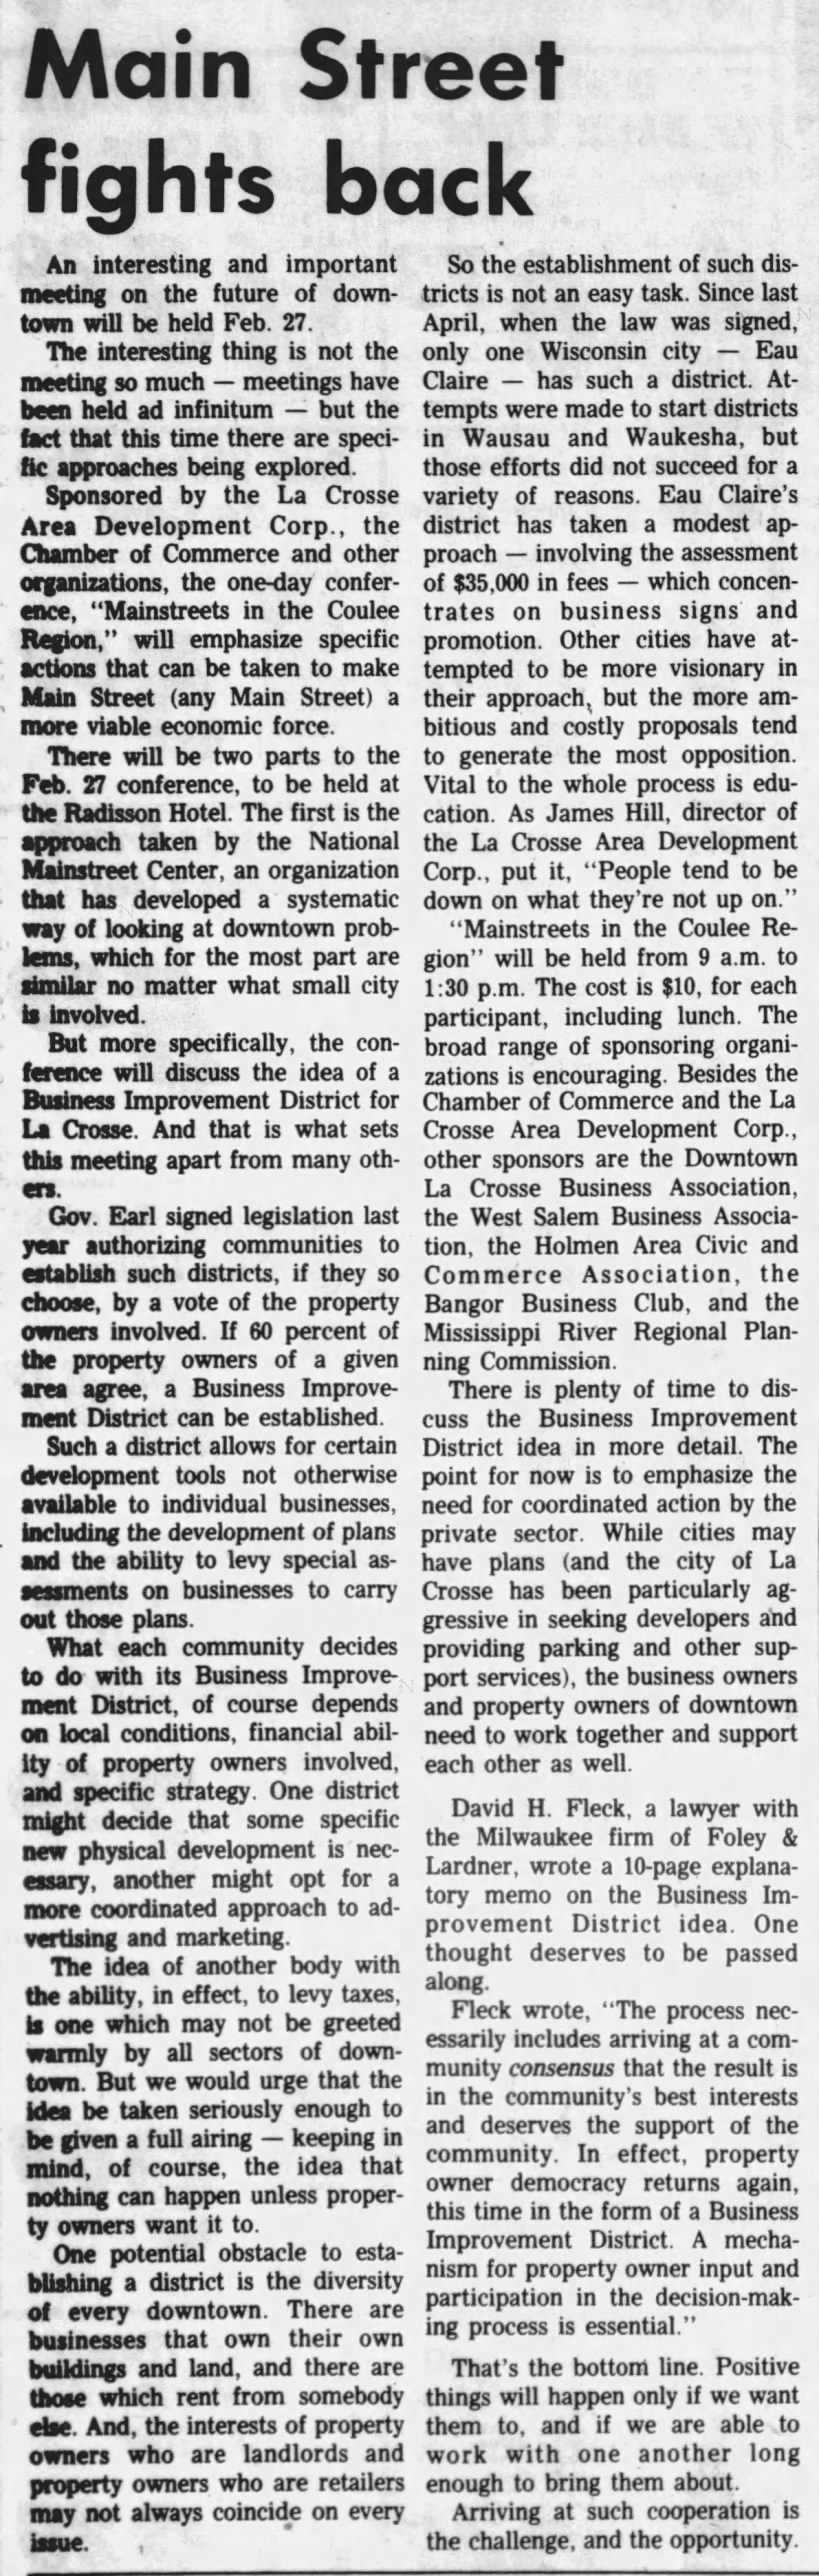 1985 Mainstreets program sponsored by West Salem Business Association